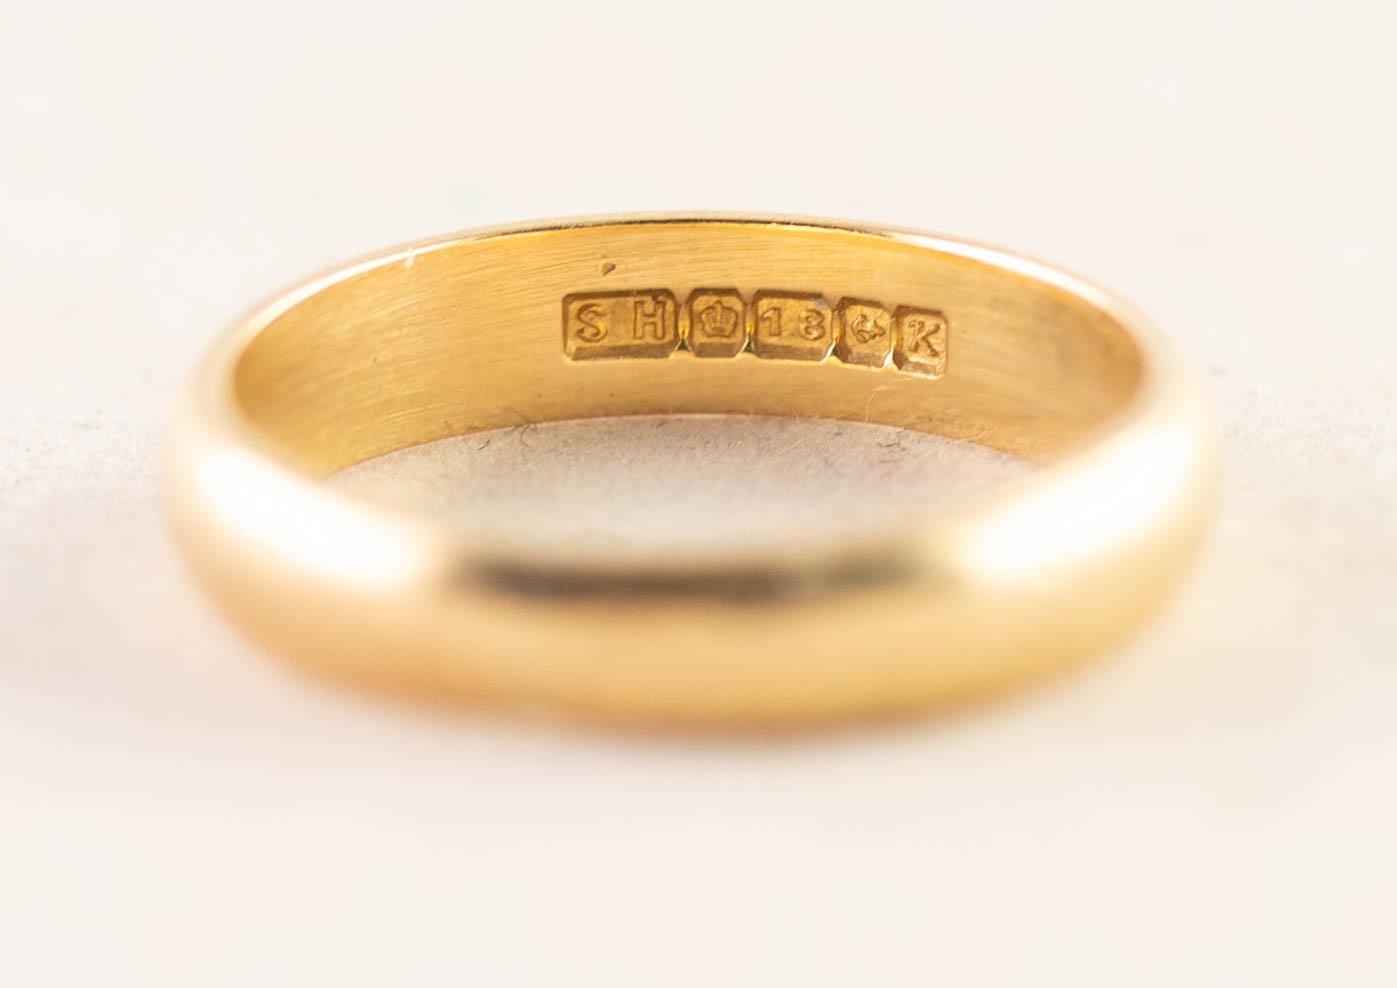 18ct GOLD WEDDING RING, 4.1gms, ring size M/N - Image 2 of 2